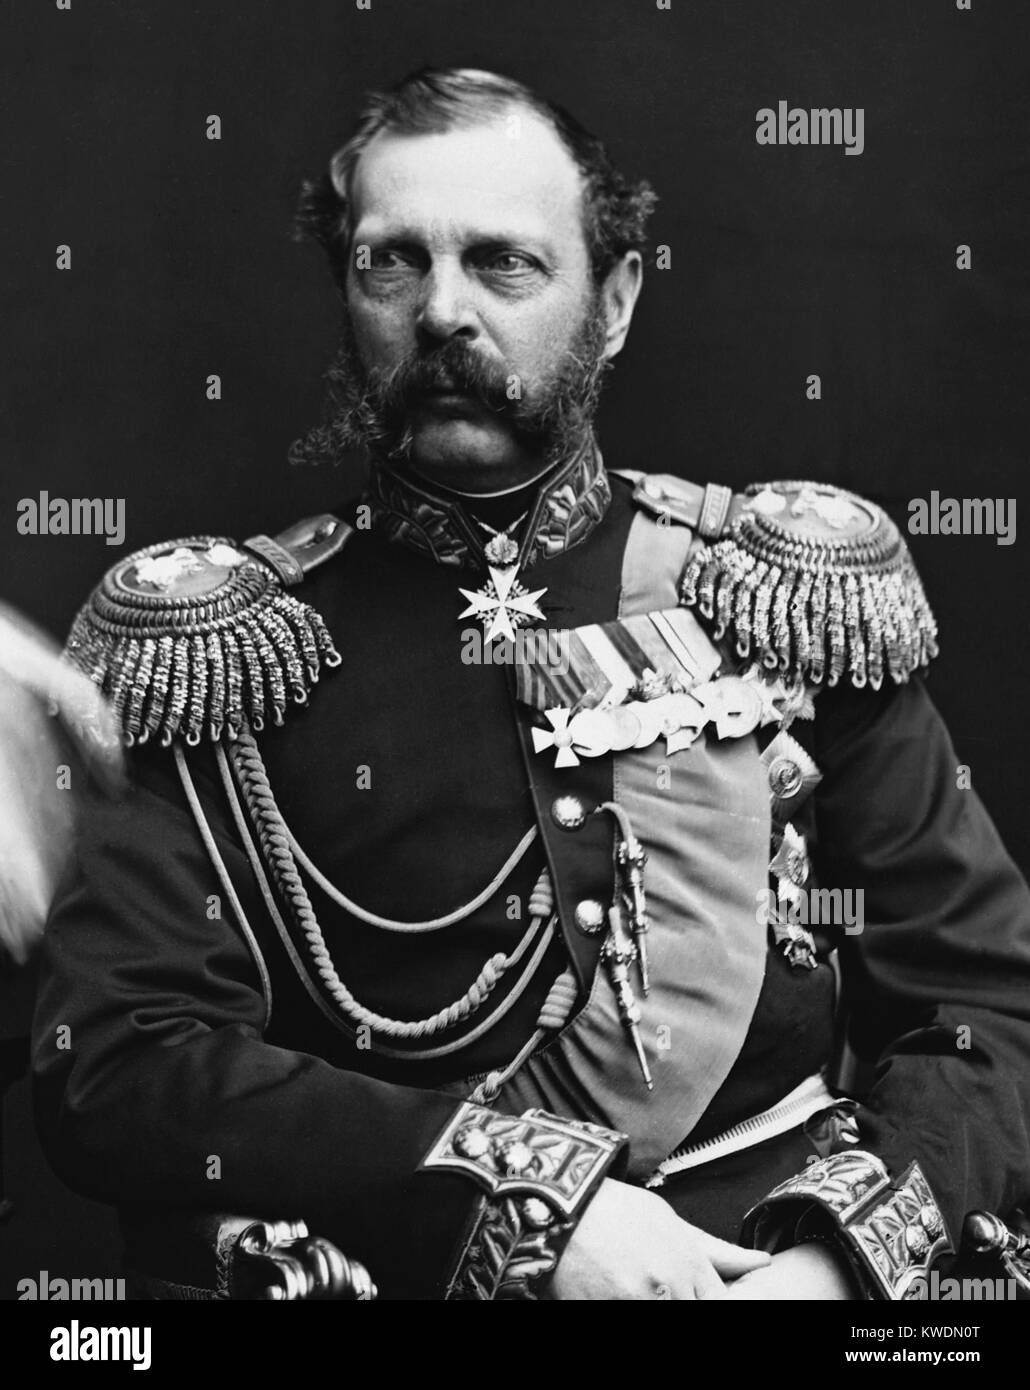 emperador-ruso-alexander-ii-1855-1881-fotograf-as-e-im-genes-de-alta